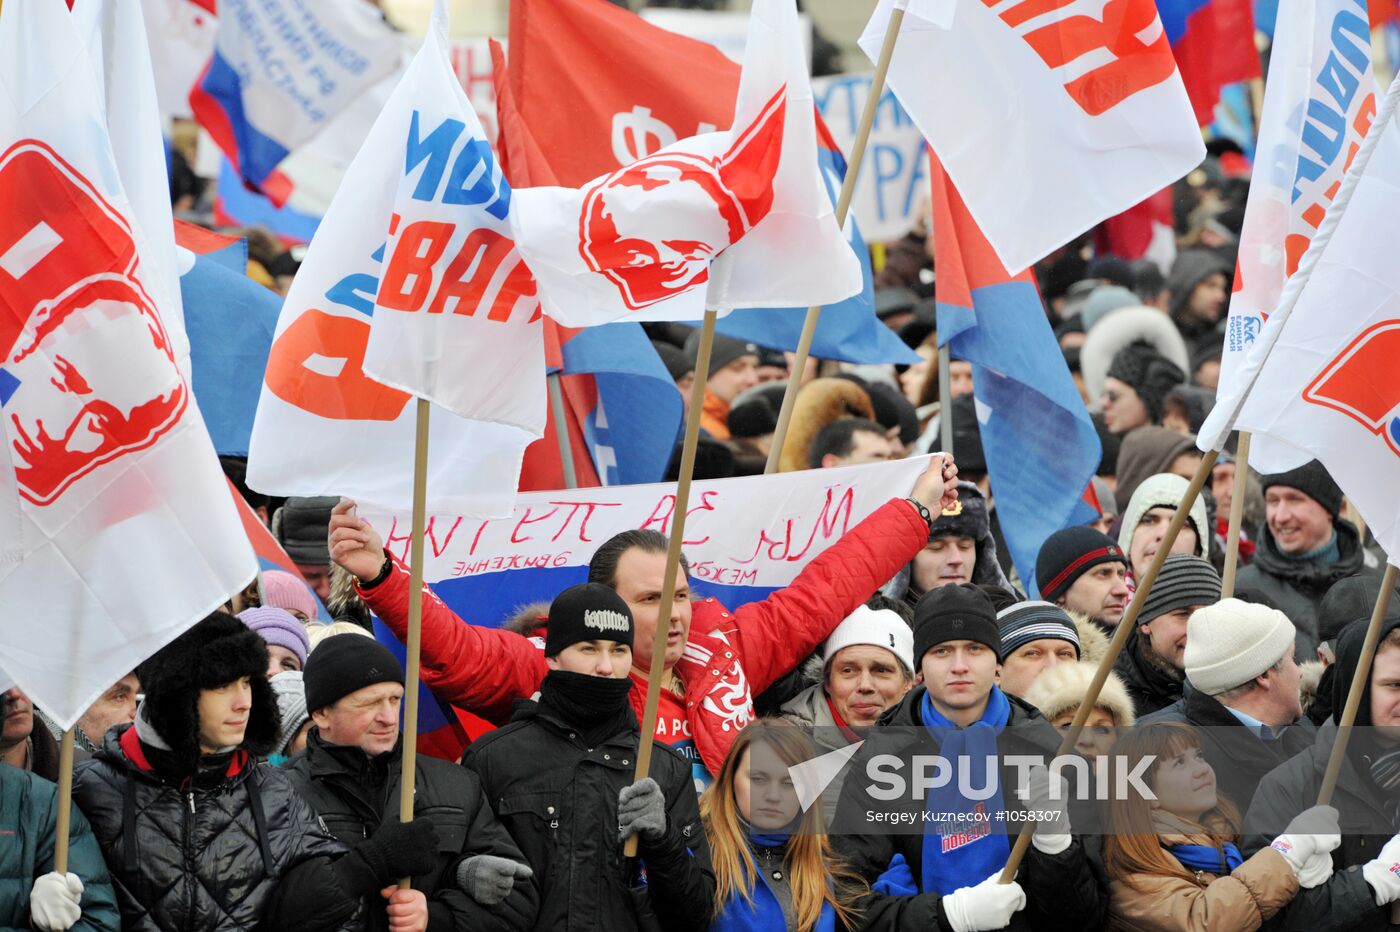 Vladimir Putin supporters' rally on Manege Square